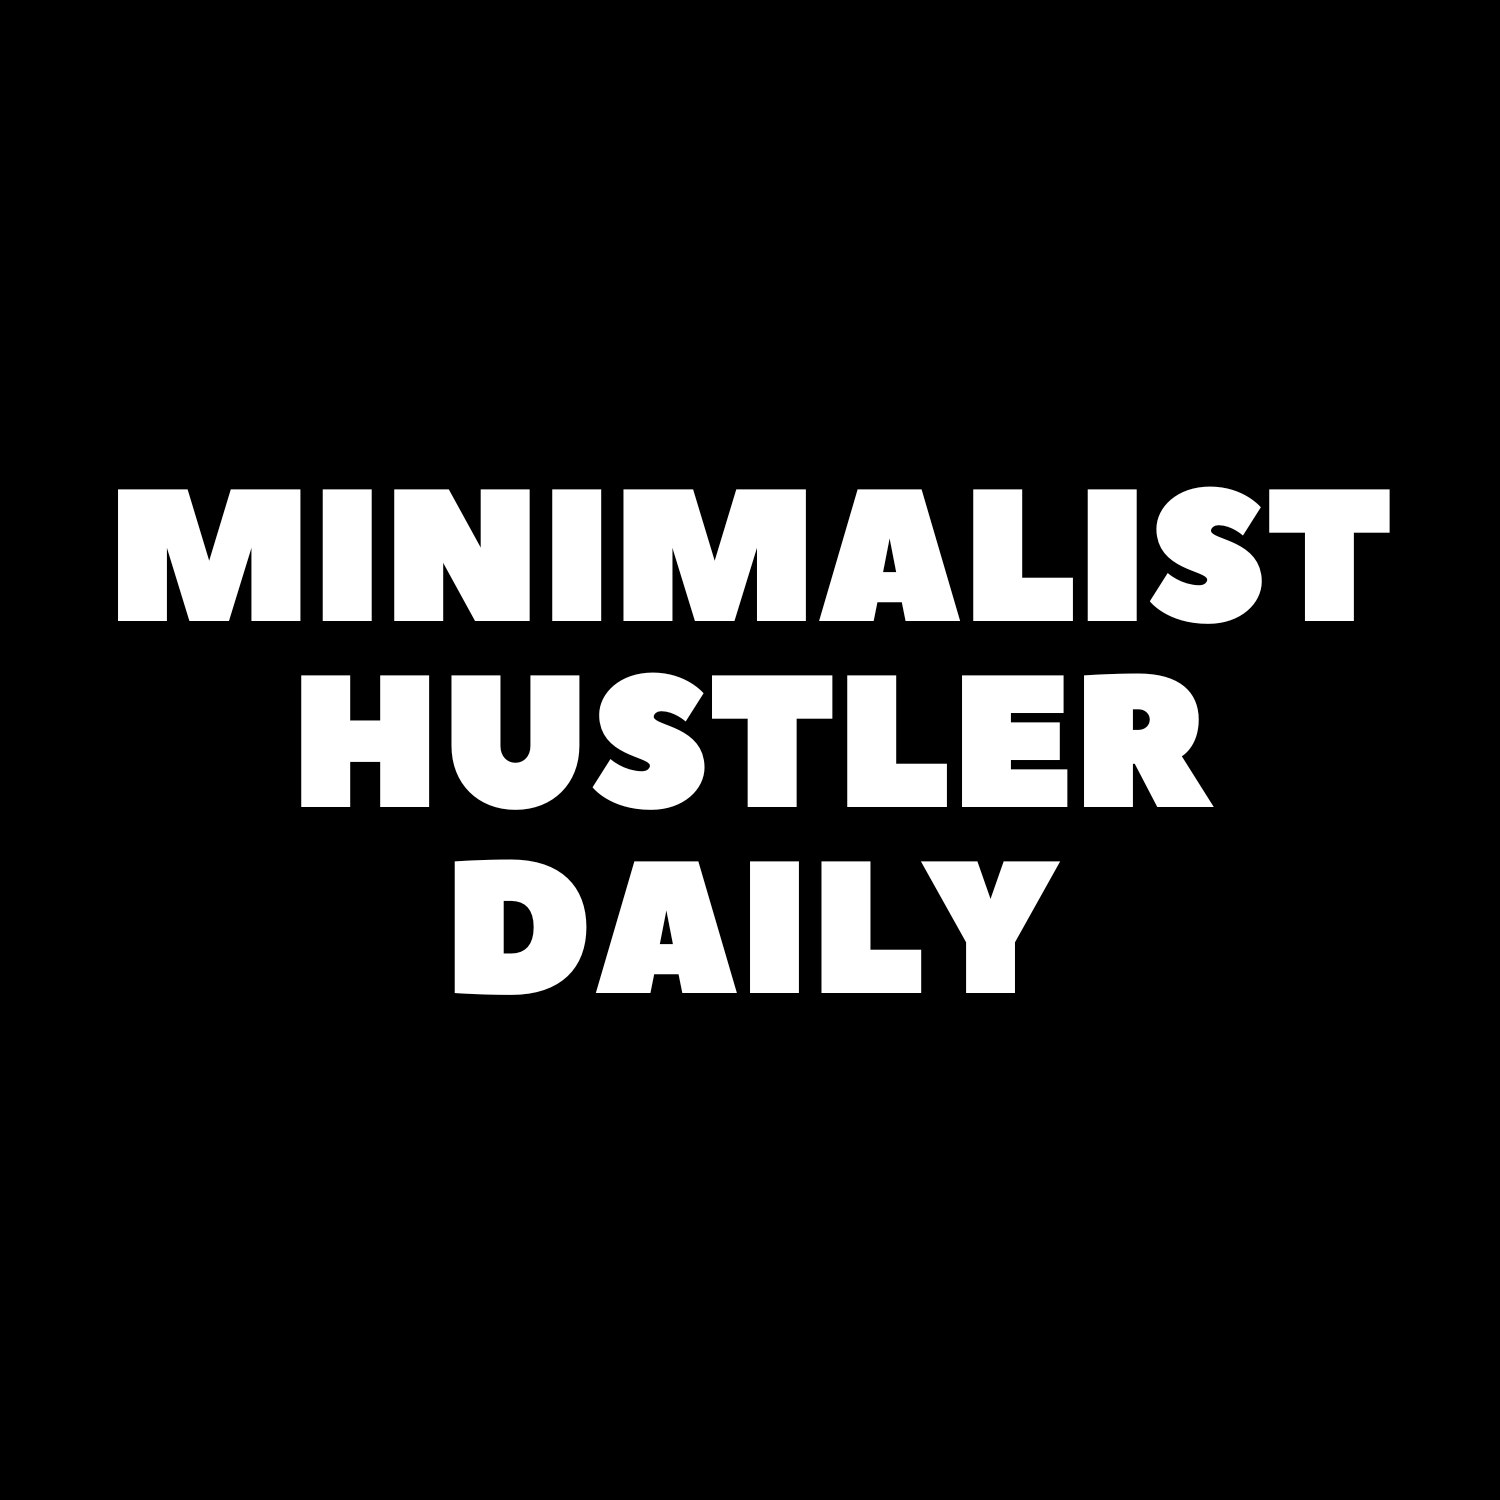 Minimalist Hustler Daily logo